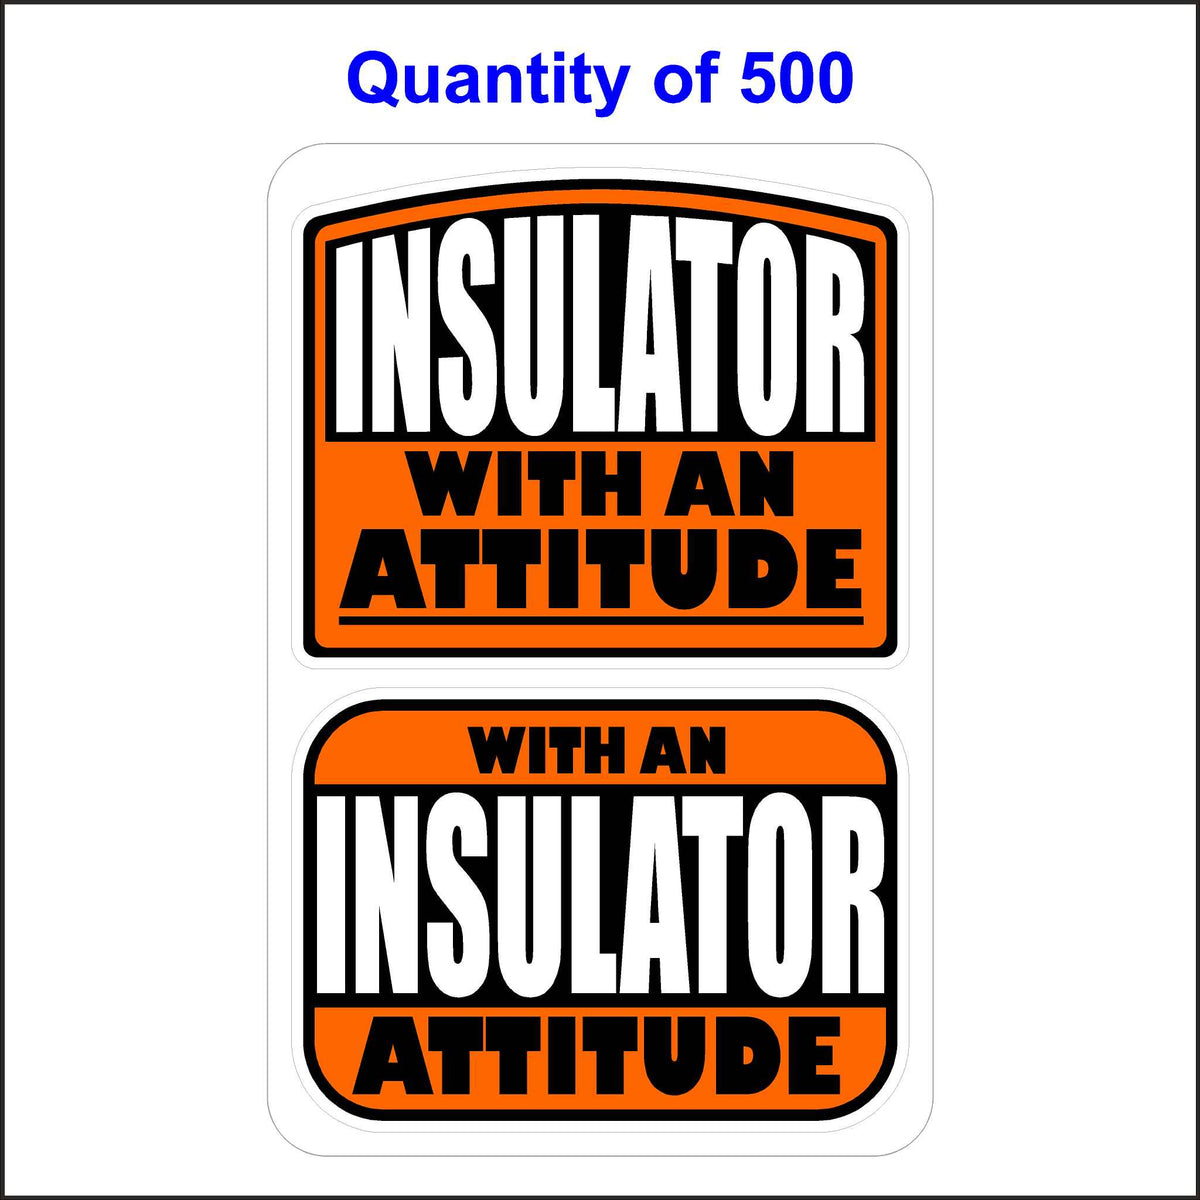 Insulator With An Attitude Stickers 500 Quantity.